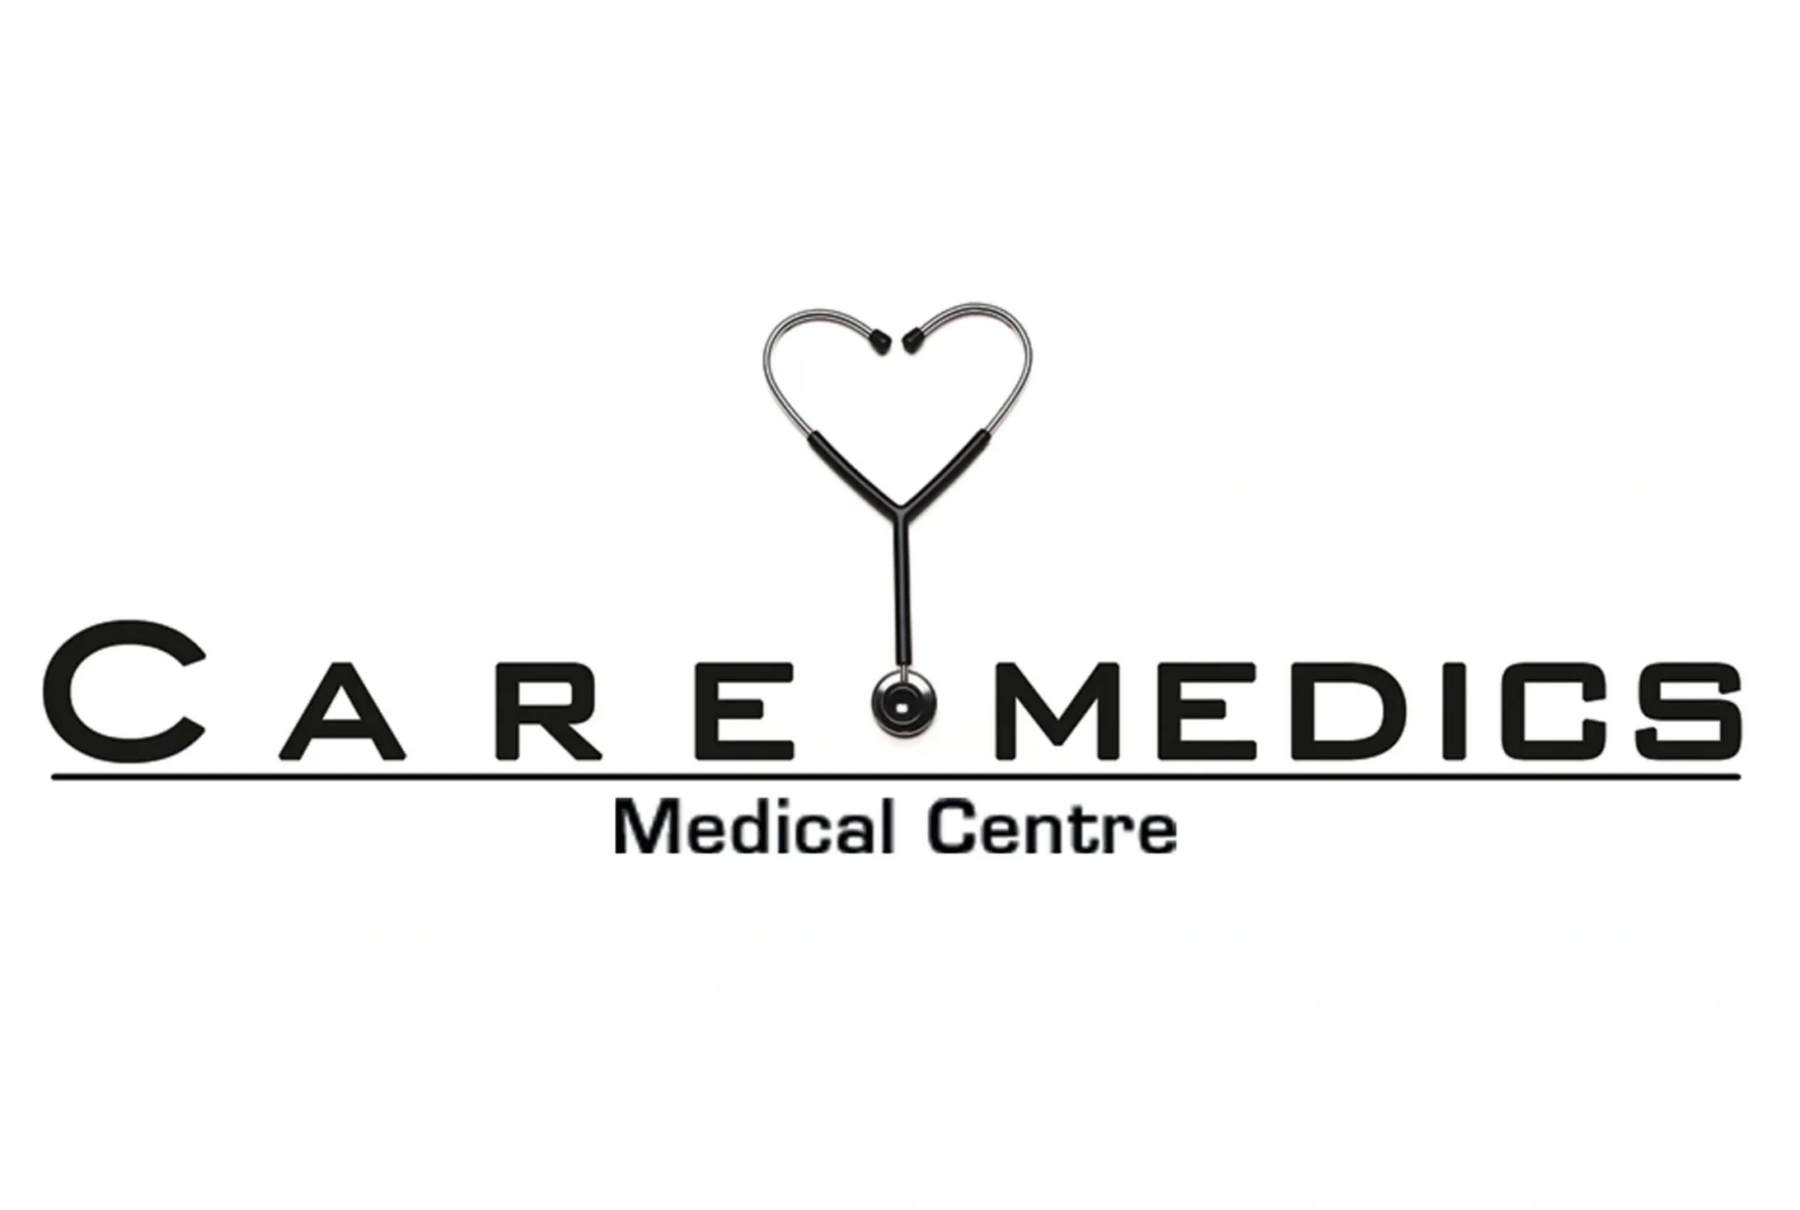 Care Medics Medical Centre logo